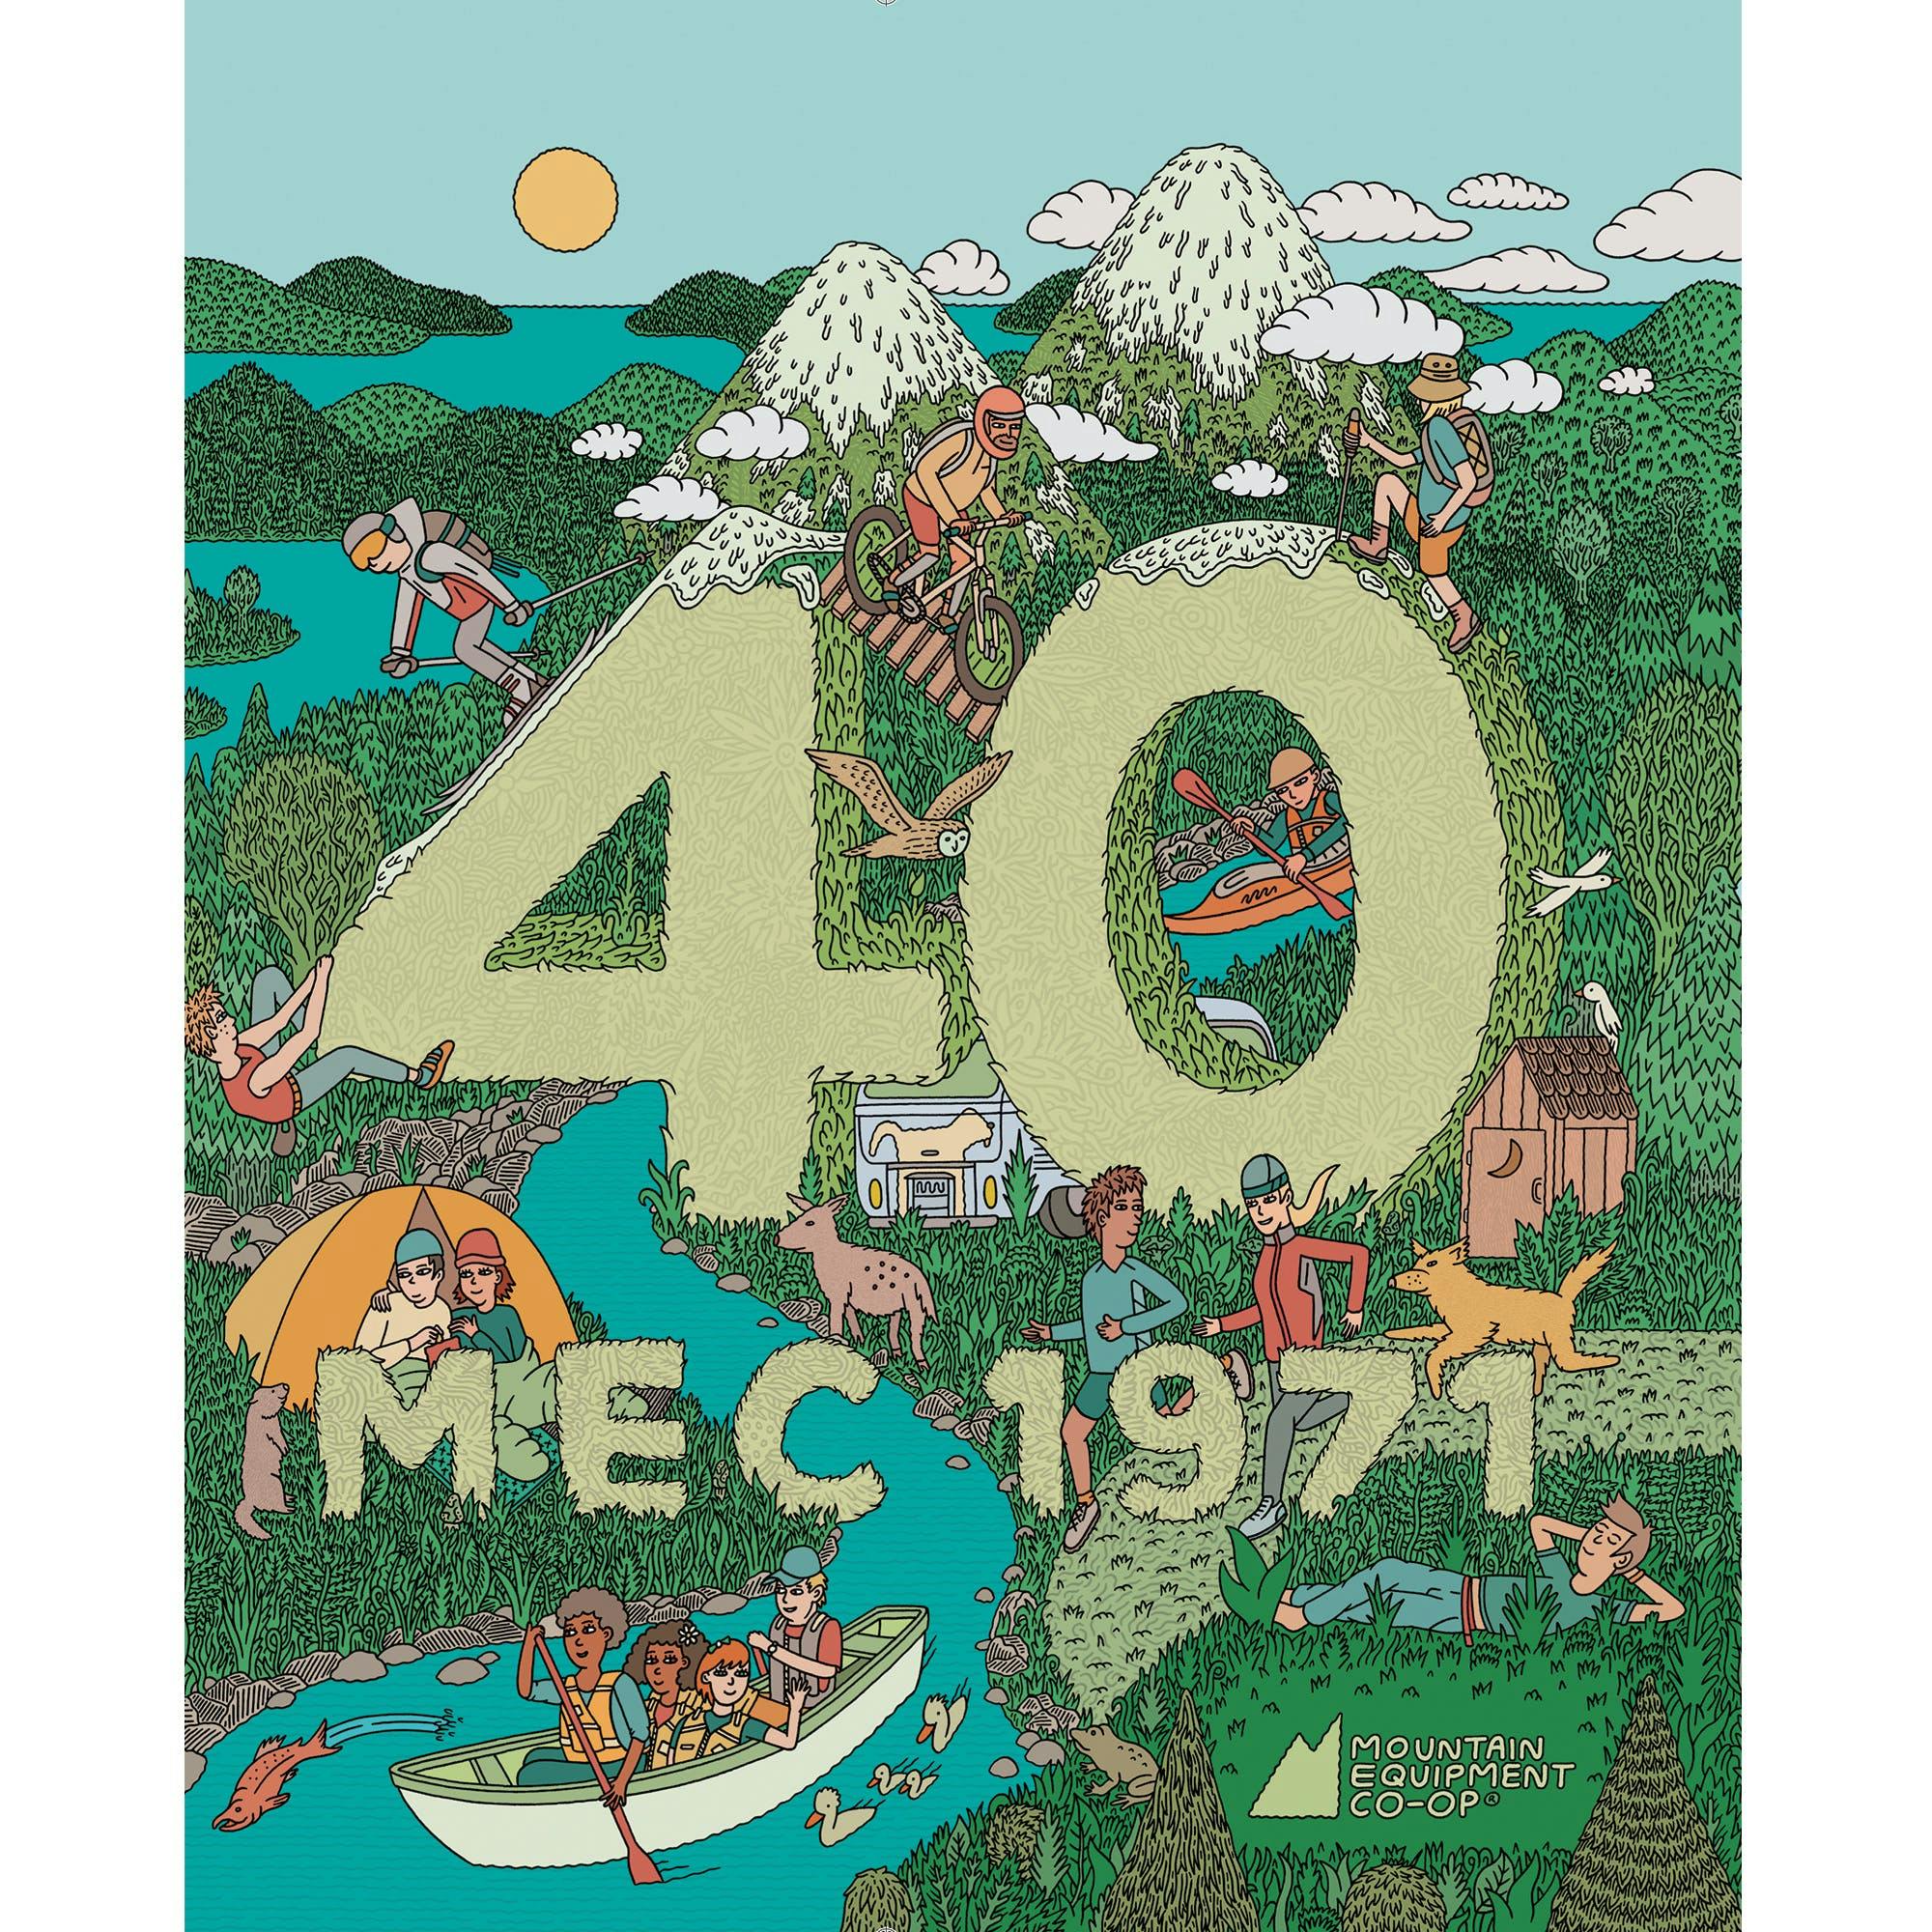 MEC 40th anniversary